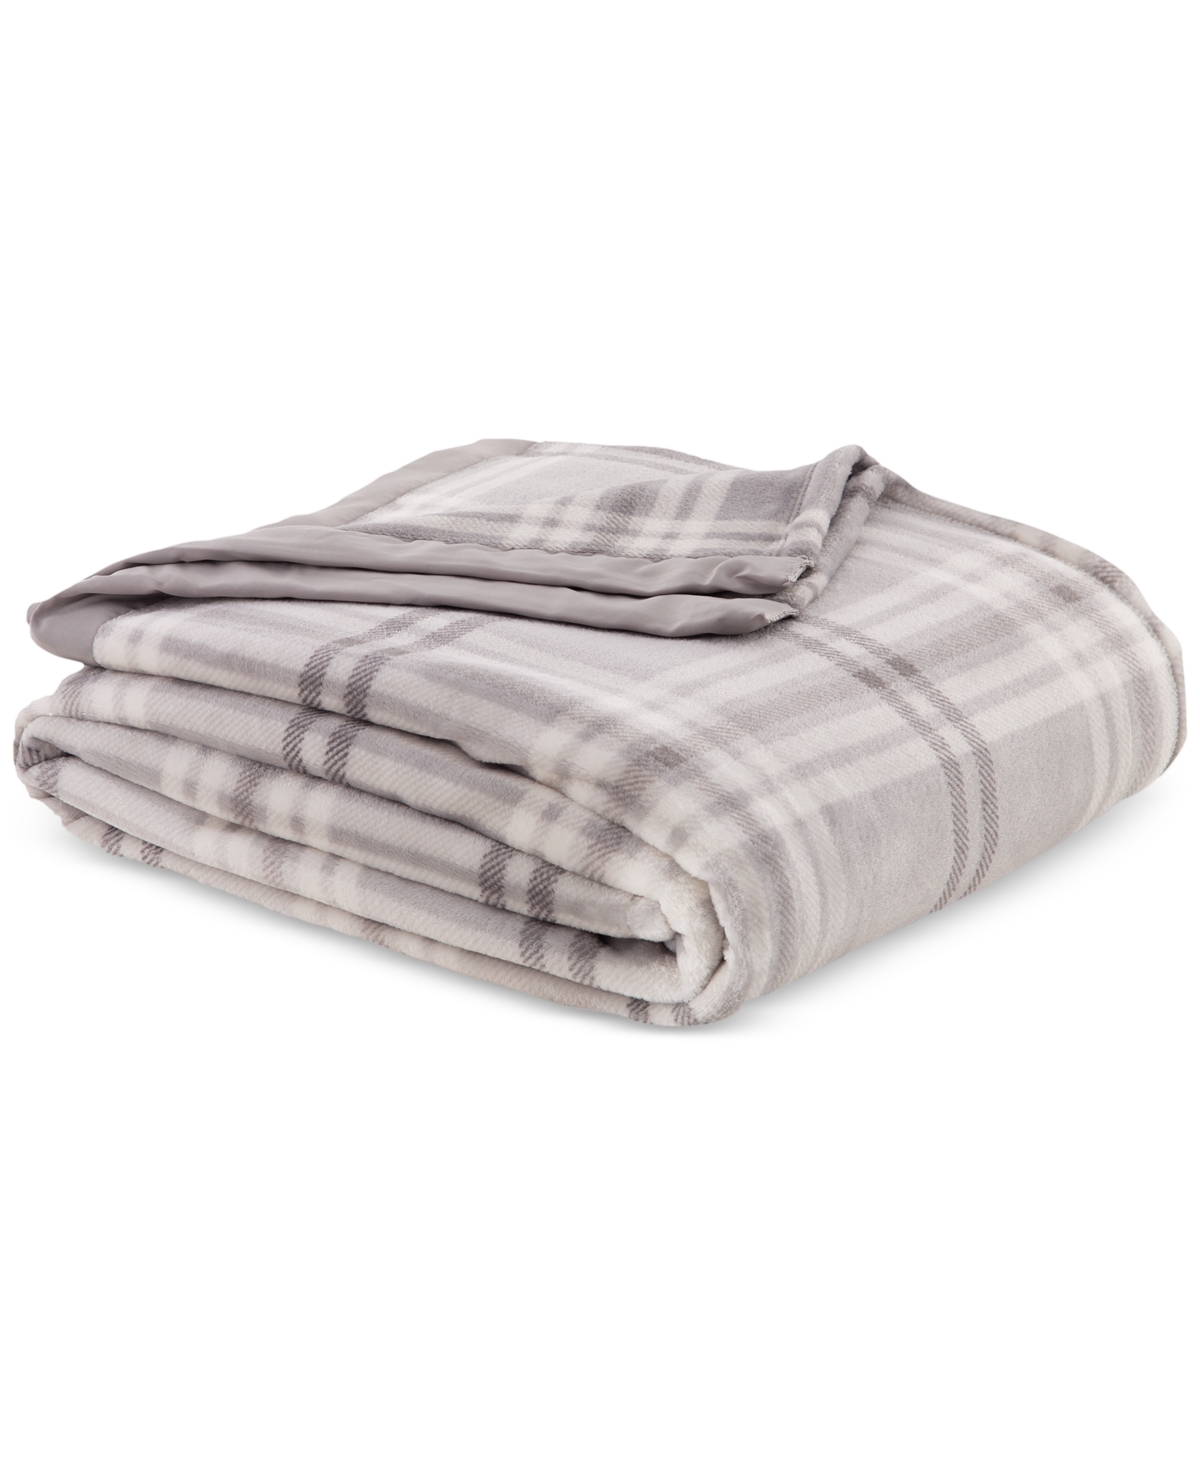 Berkshire Classic Velvety Plush King Blanket, Created For Macy's In Grey Plaid